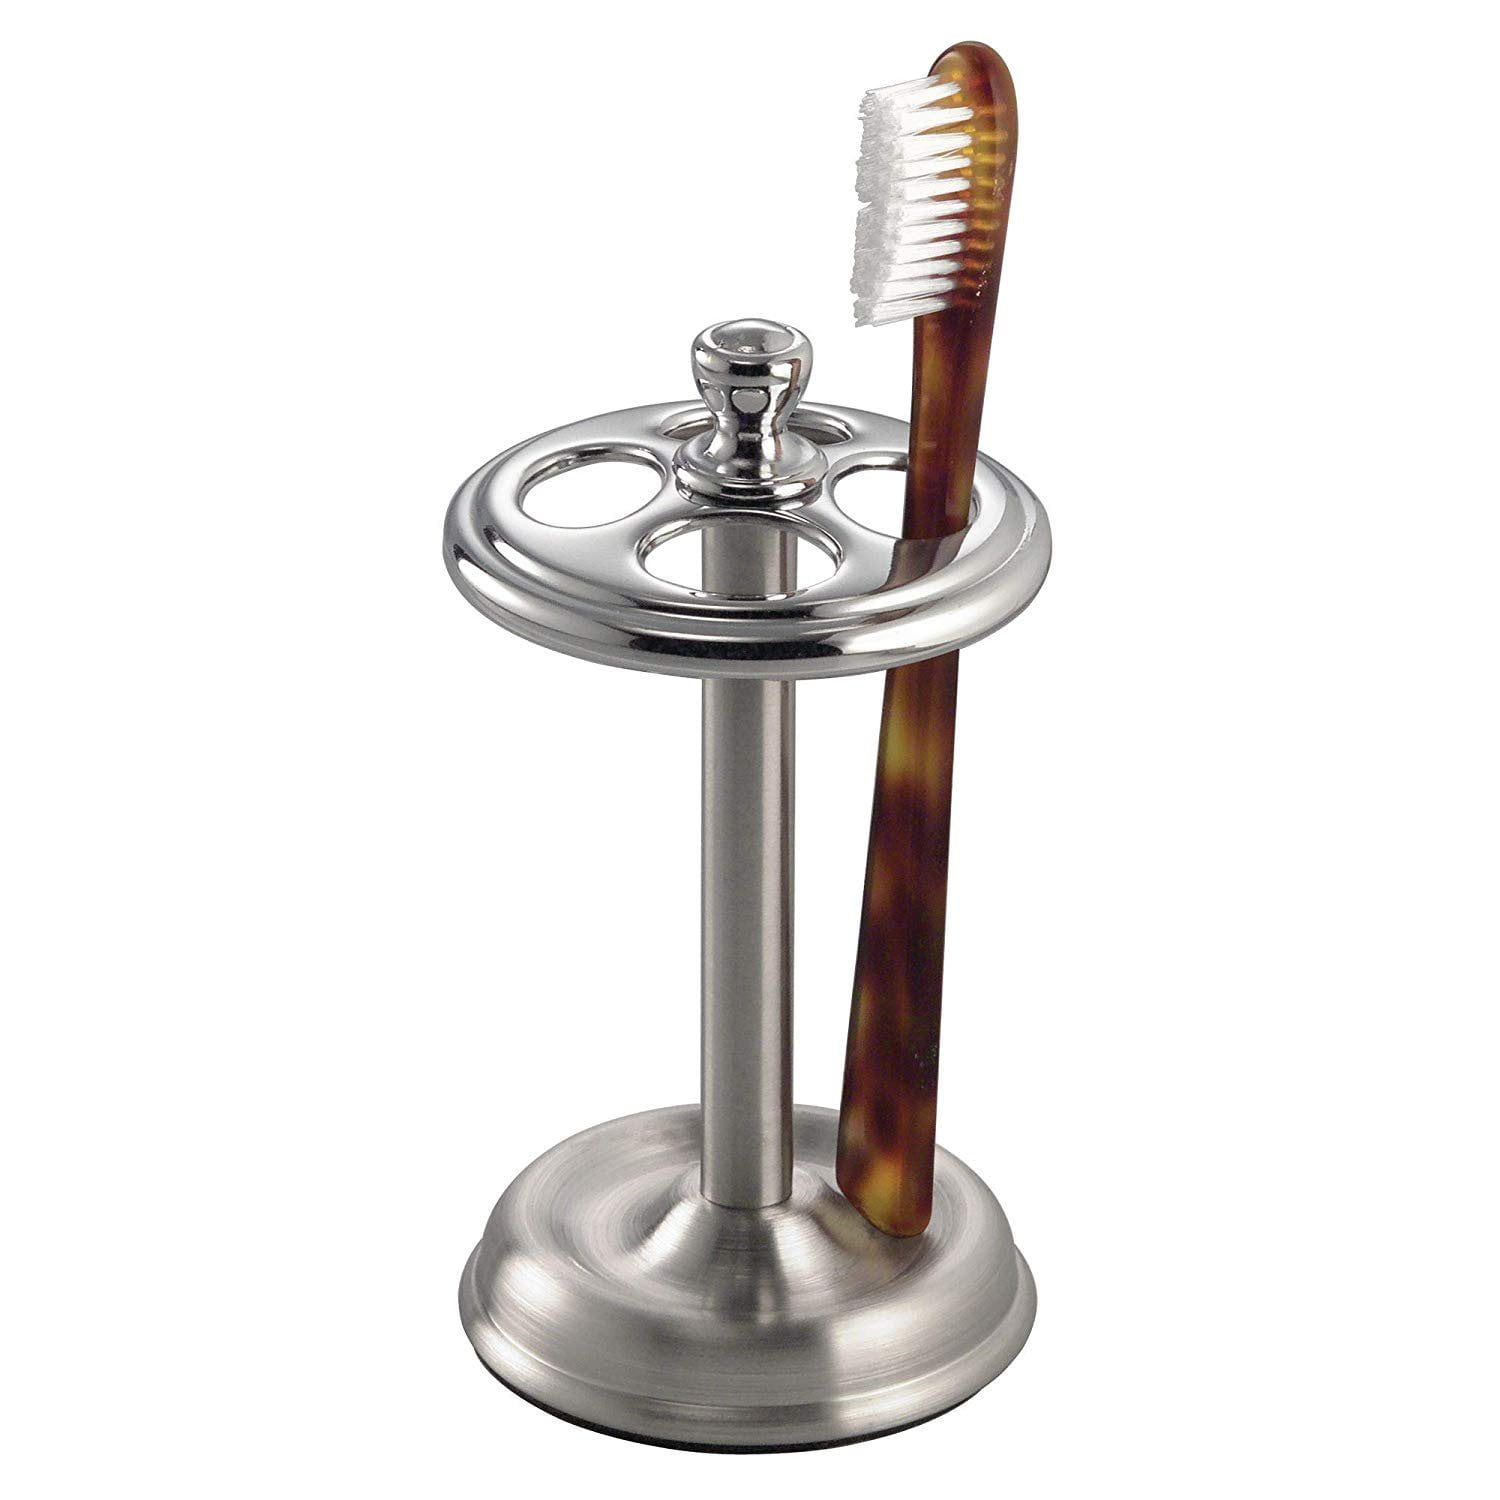 Interdesign York Metal Toothbrush Holder Stand